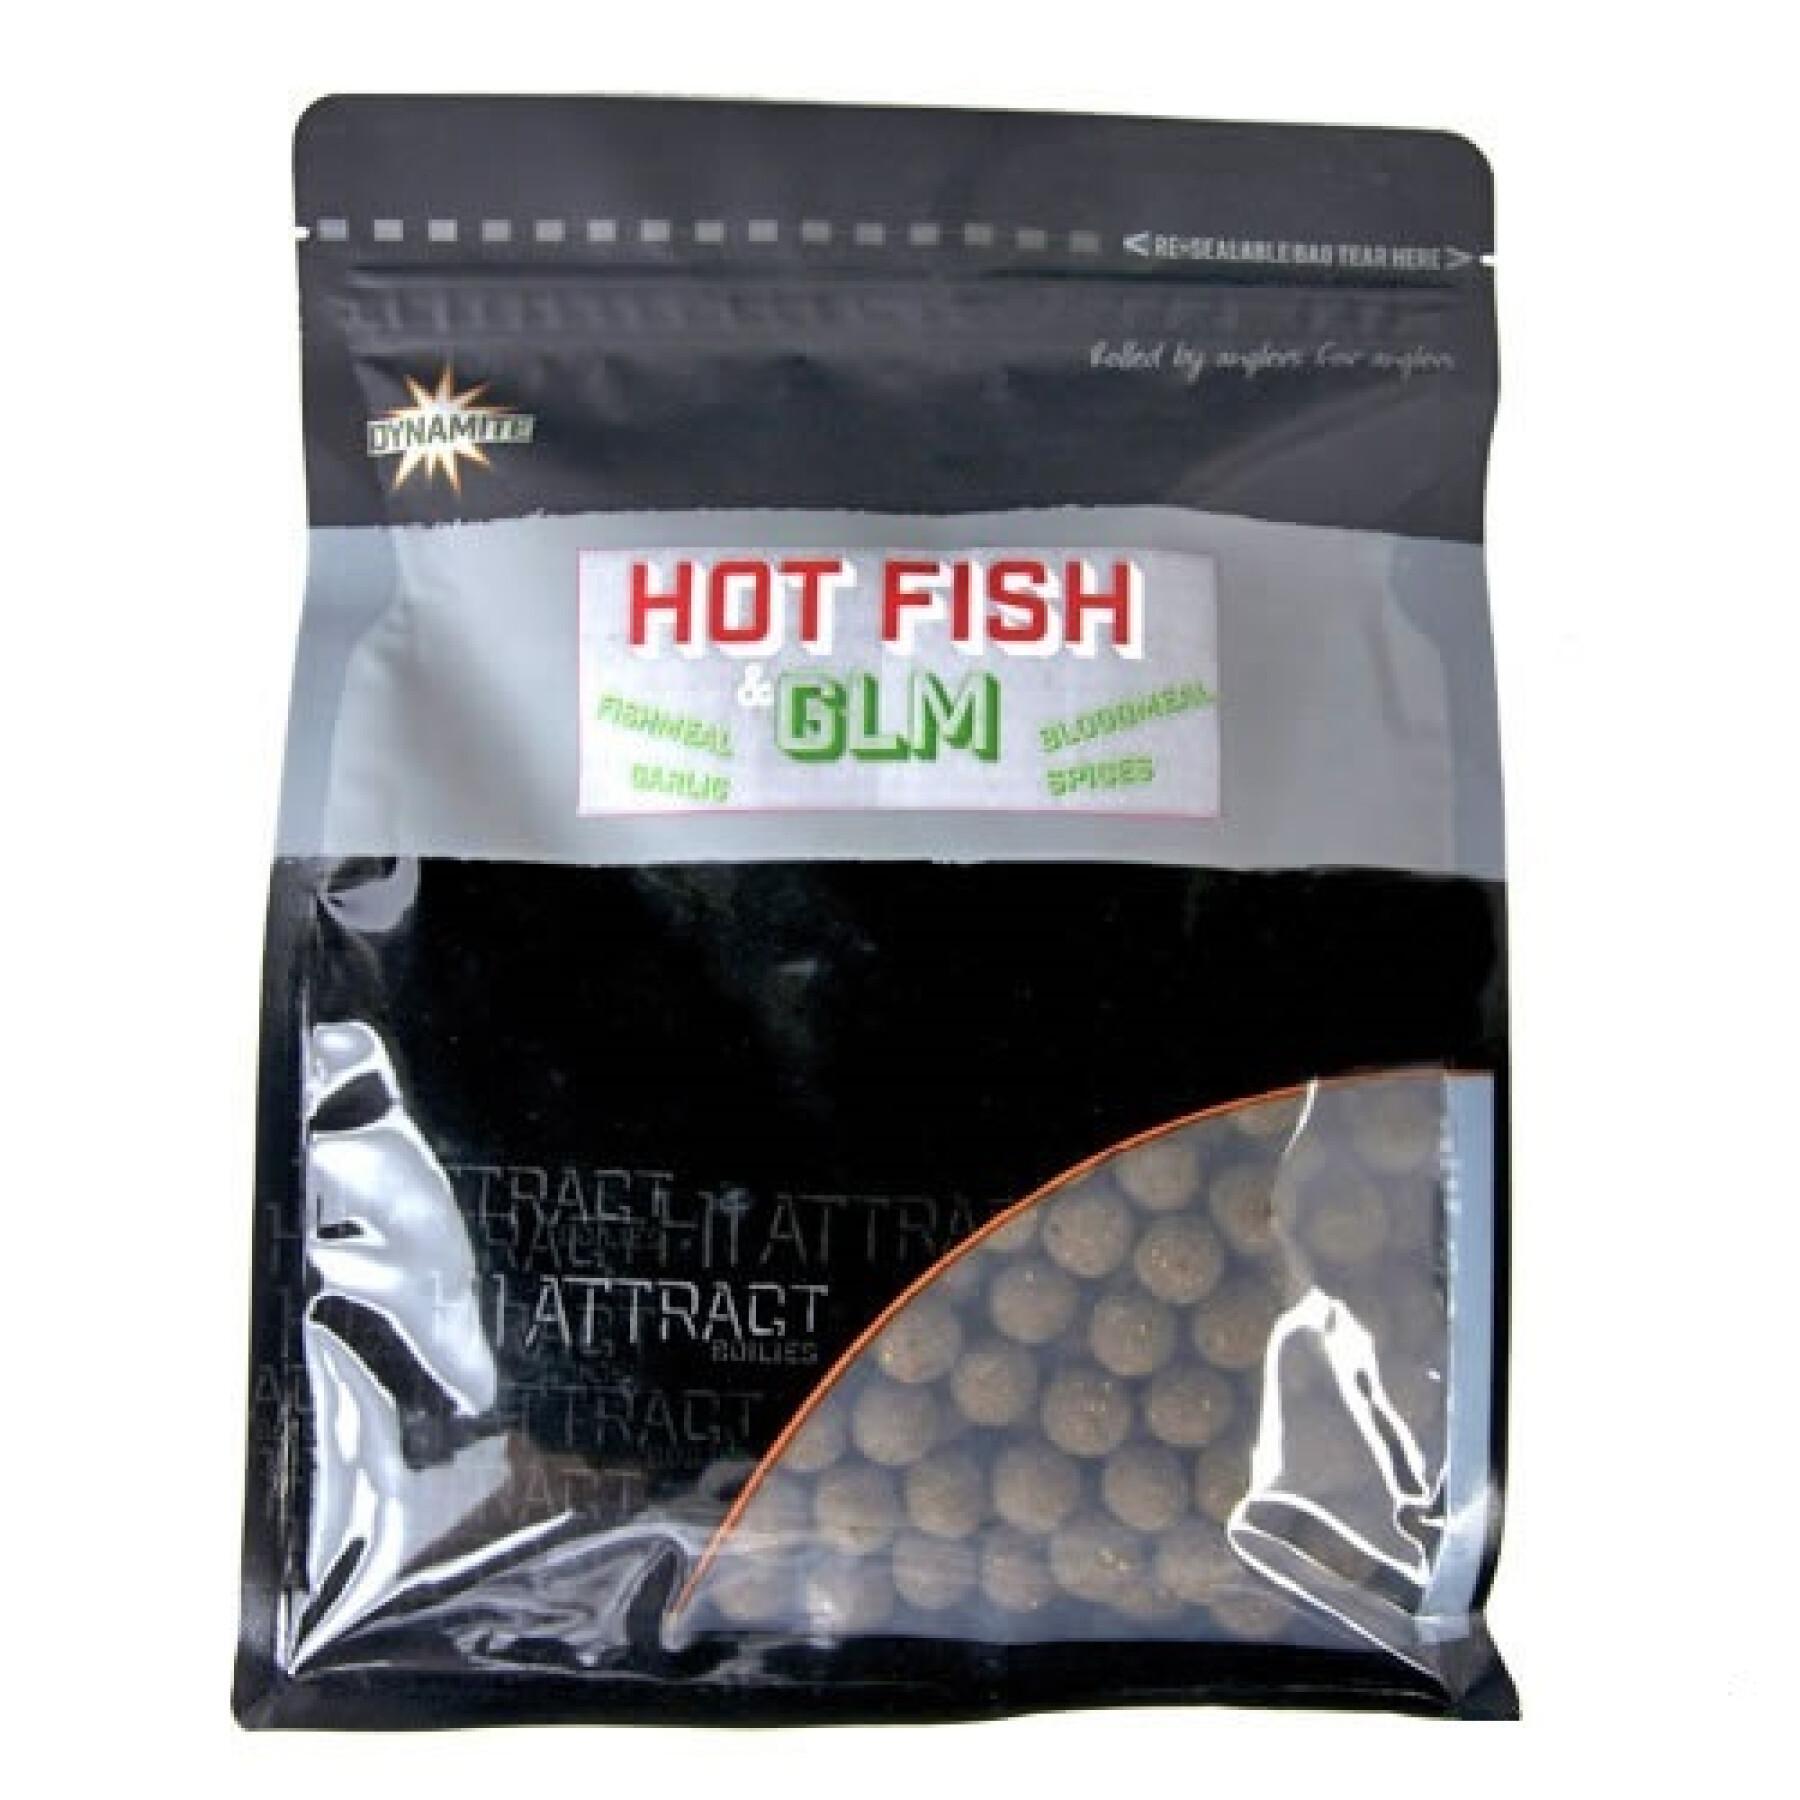 Bouillettes Hot Fish & GLM 20mm Dynamite Baits 1kg